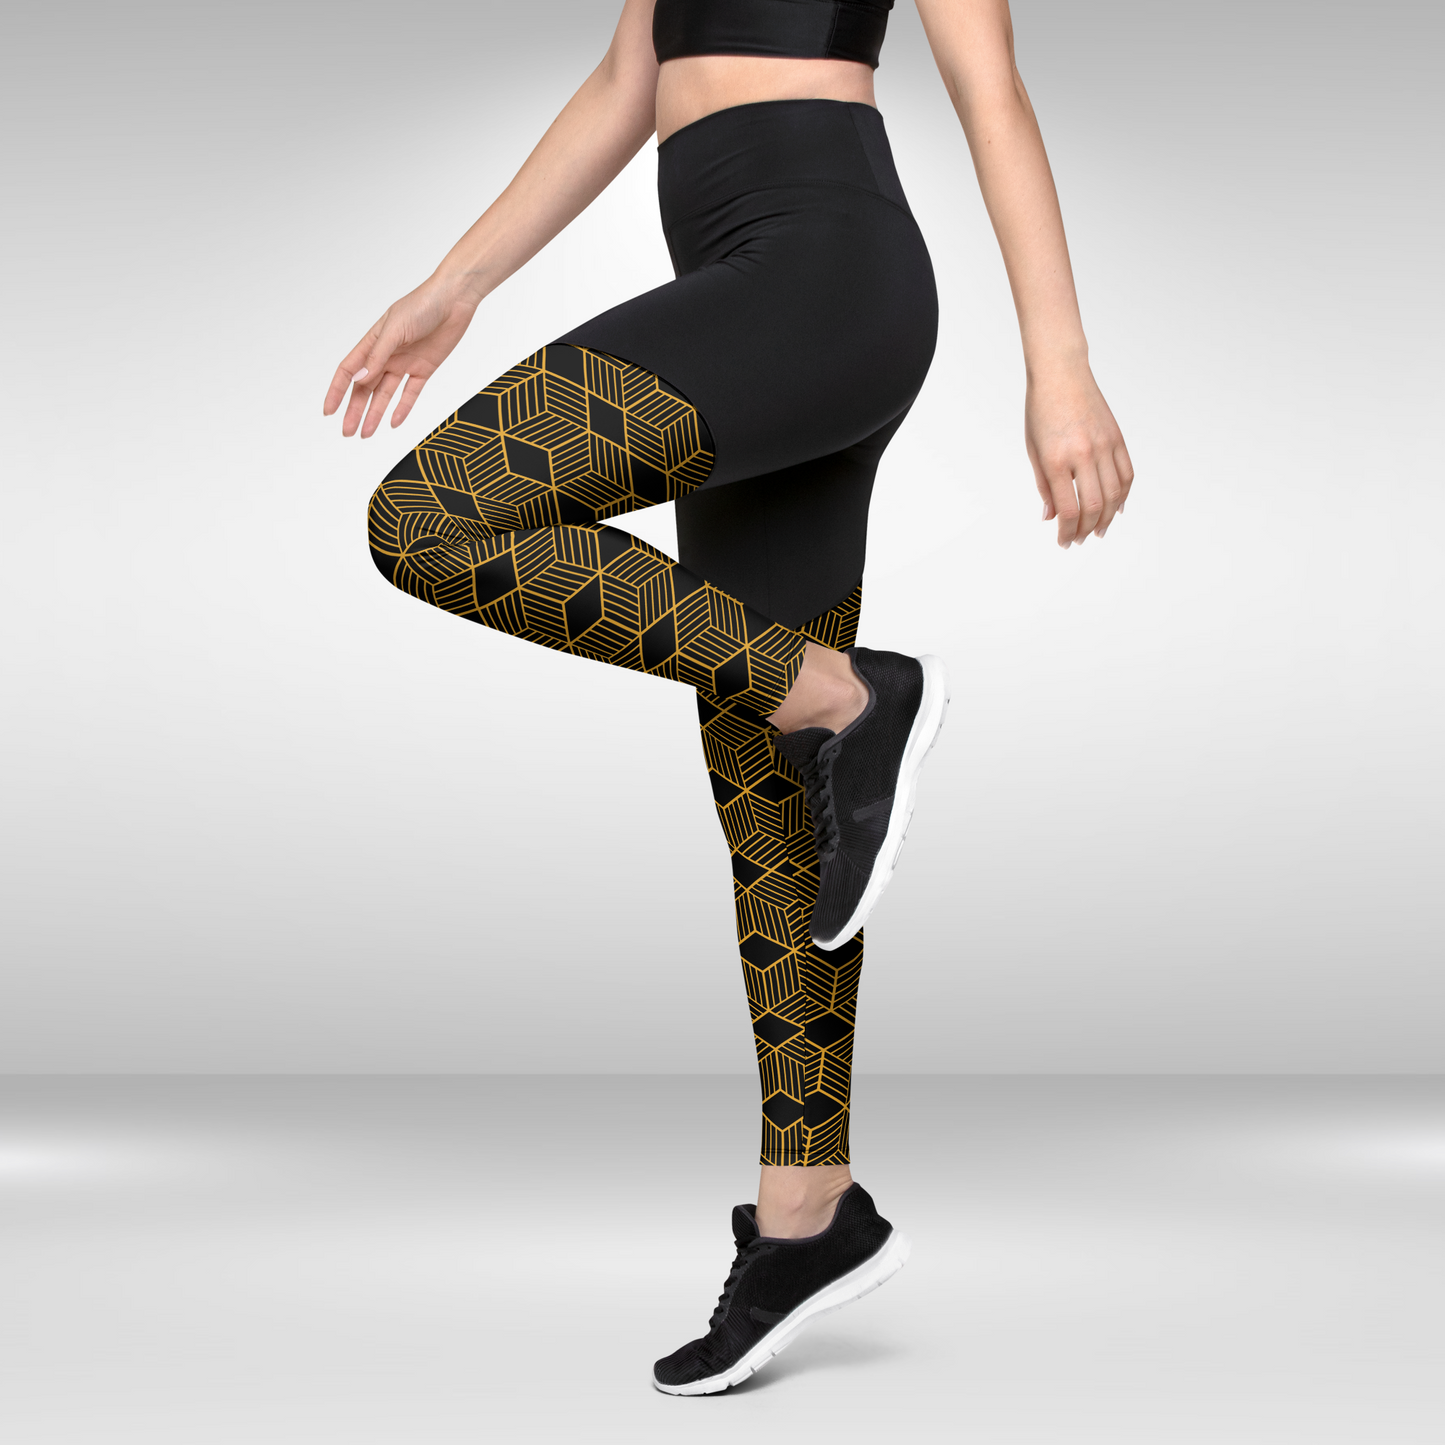 Women Compression Leggings - Black and Gold Geometric Print